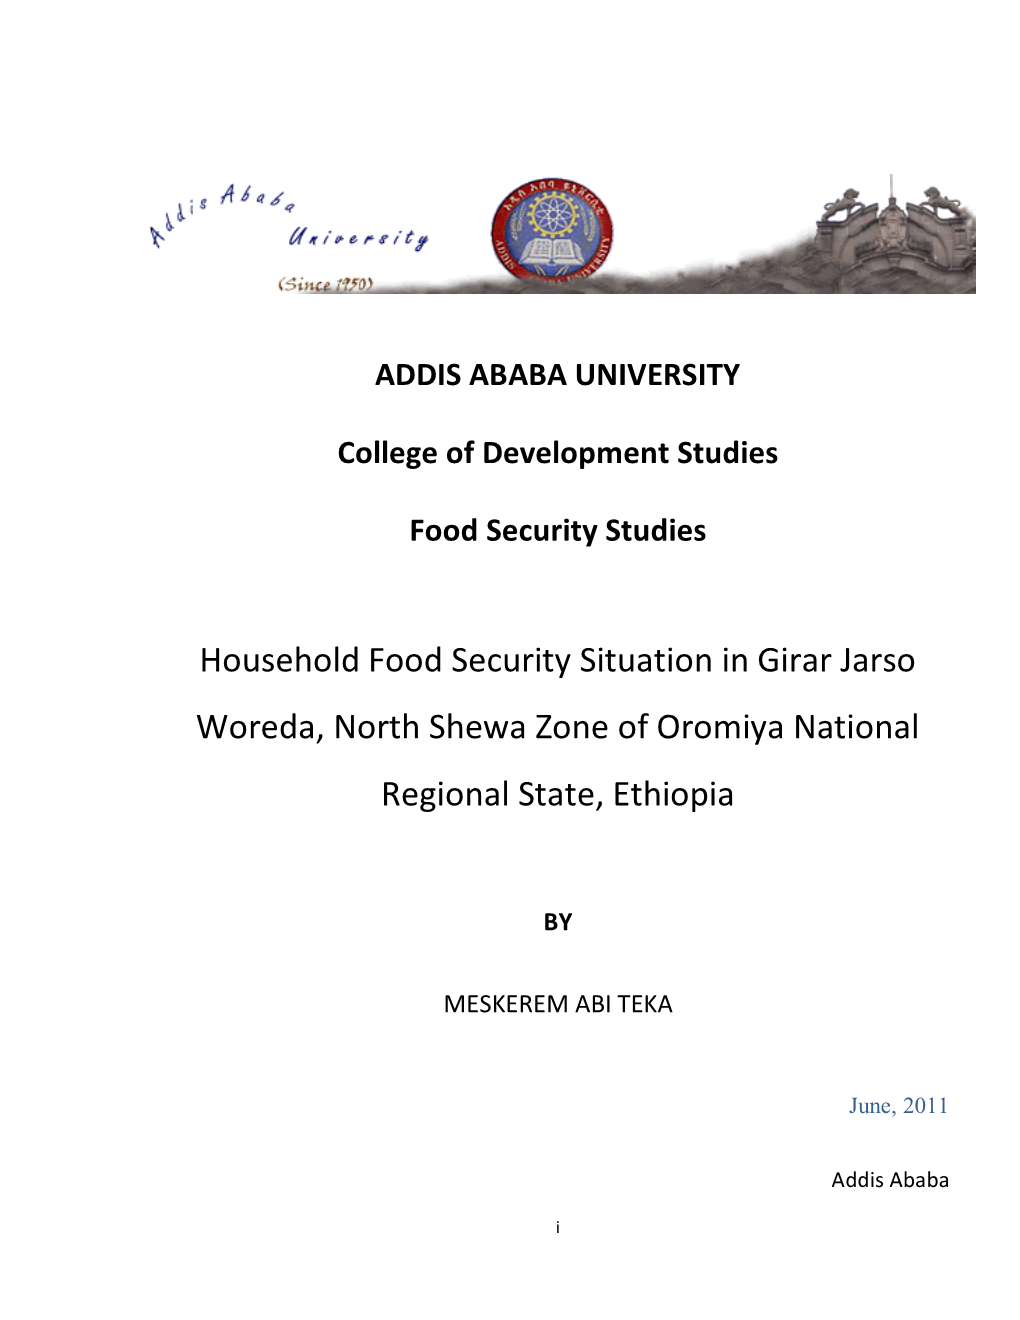 Household Food Security Situation in Girar Jarso Woreda, North Shewa Zone of Oromiya National Regional State, Ethiopia